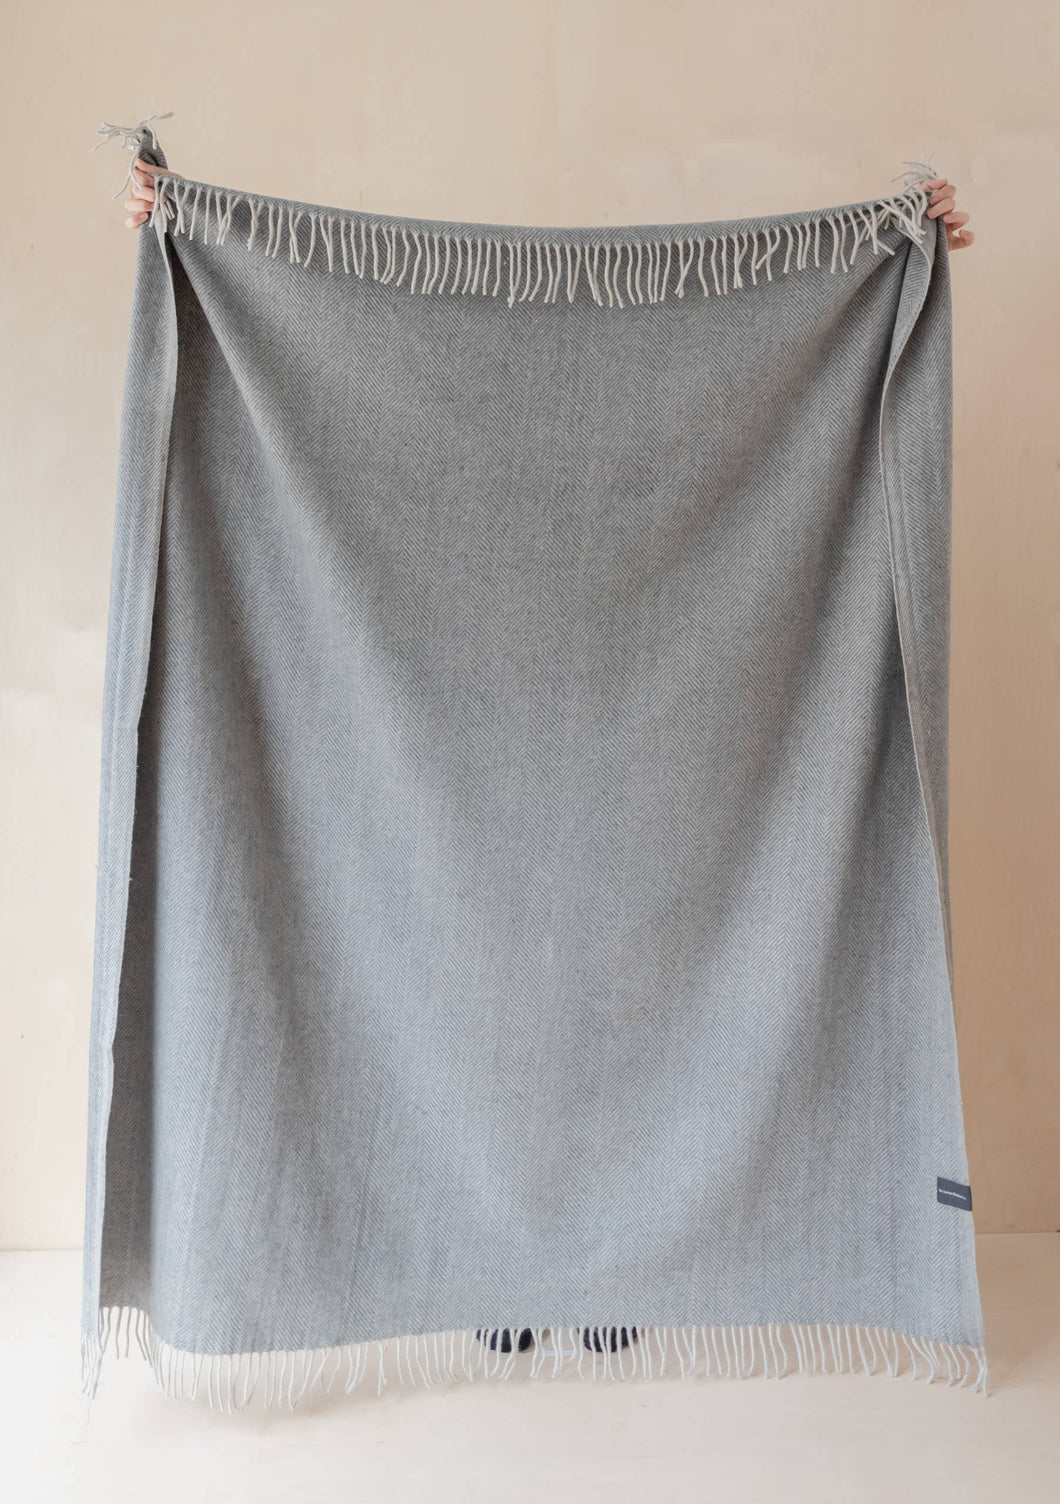 Recycled Wool Blanket in Charcoal Herringbone